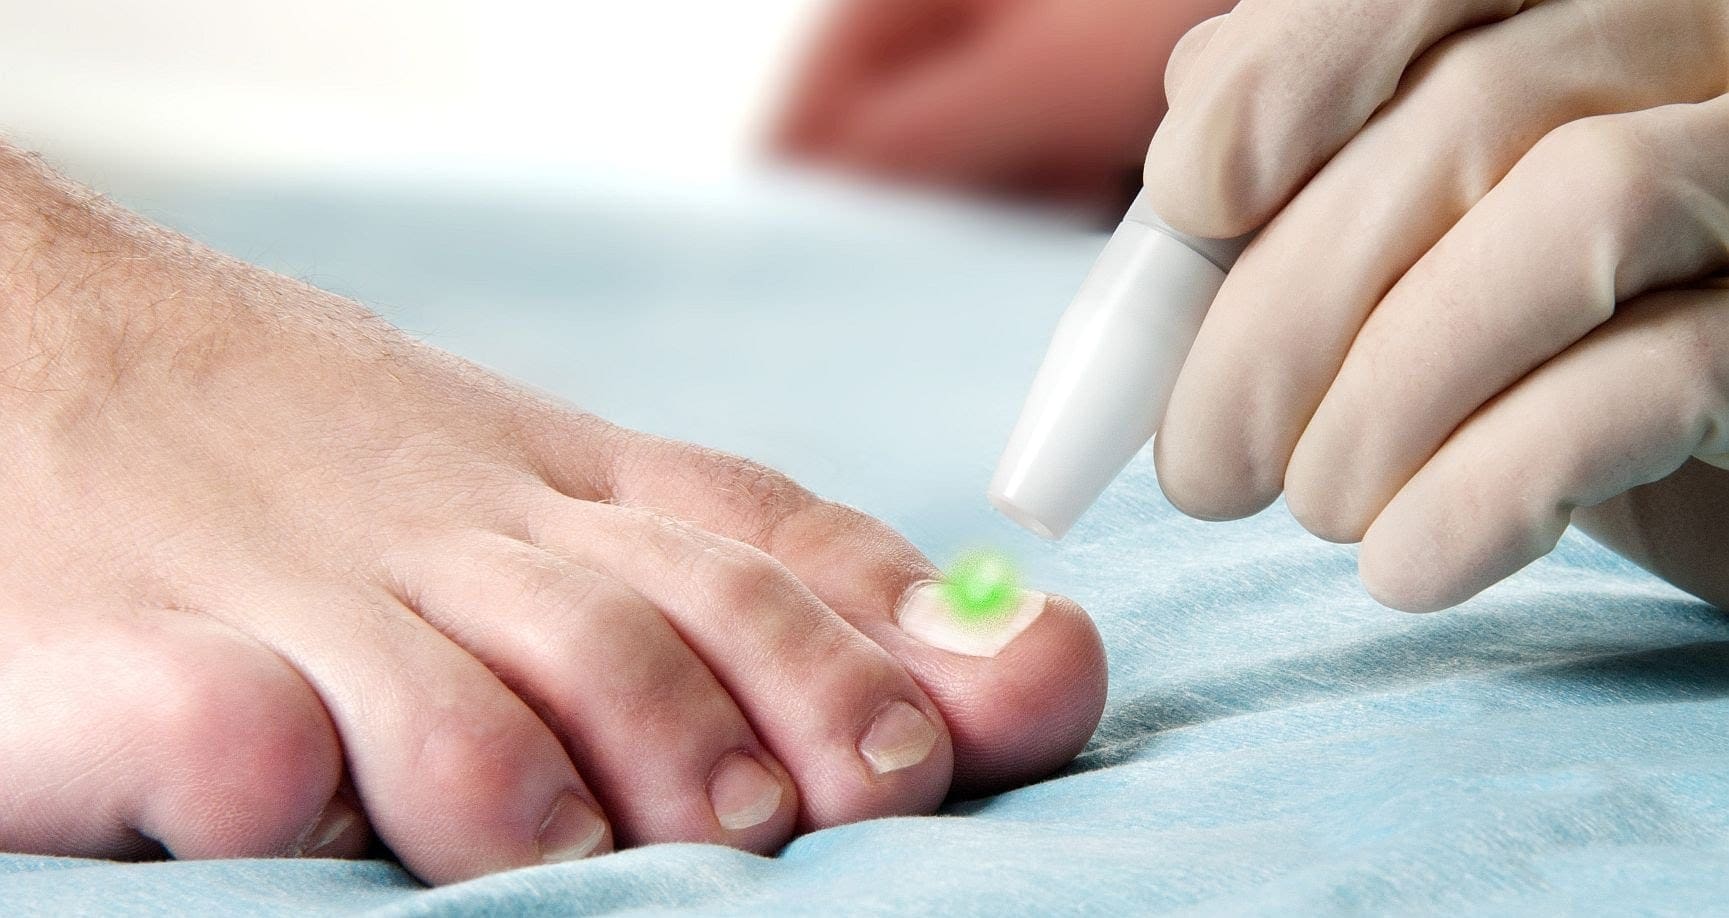 fungal toenail care